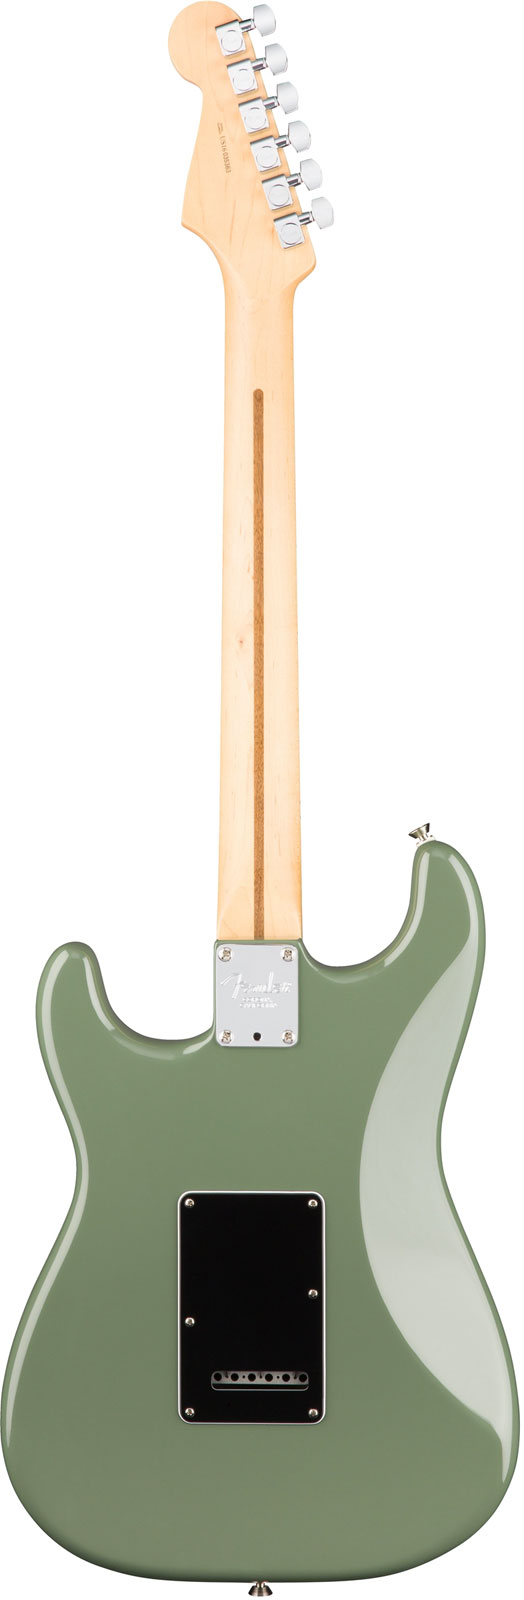 Fender Strat American Professional 2017 3s Usa Mn - Antique Olive - Elektrische gitaar in Str-vorm - Variation 2